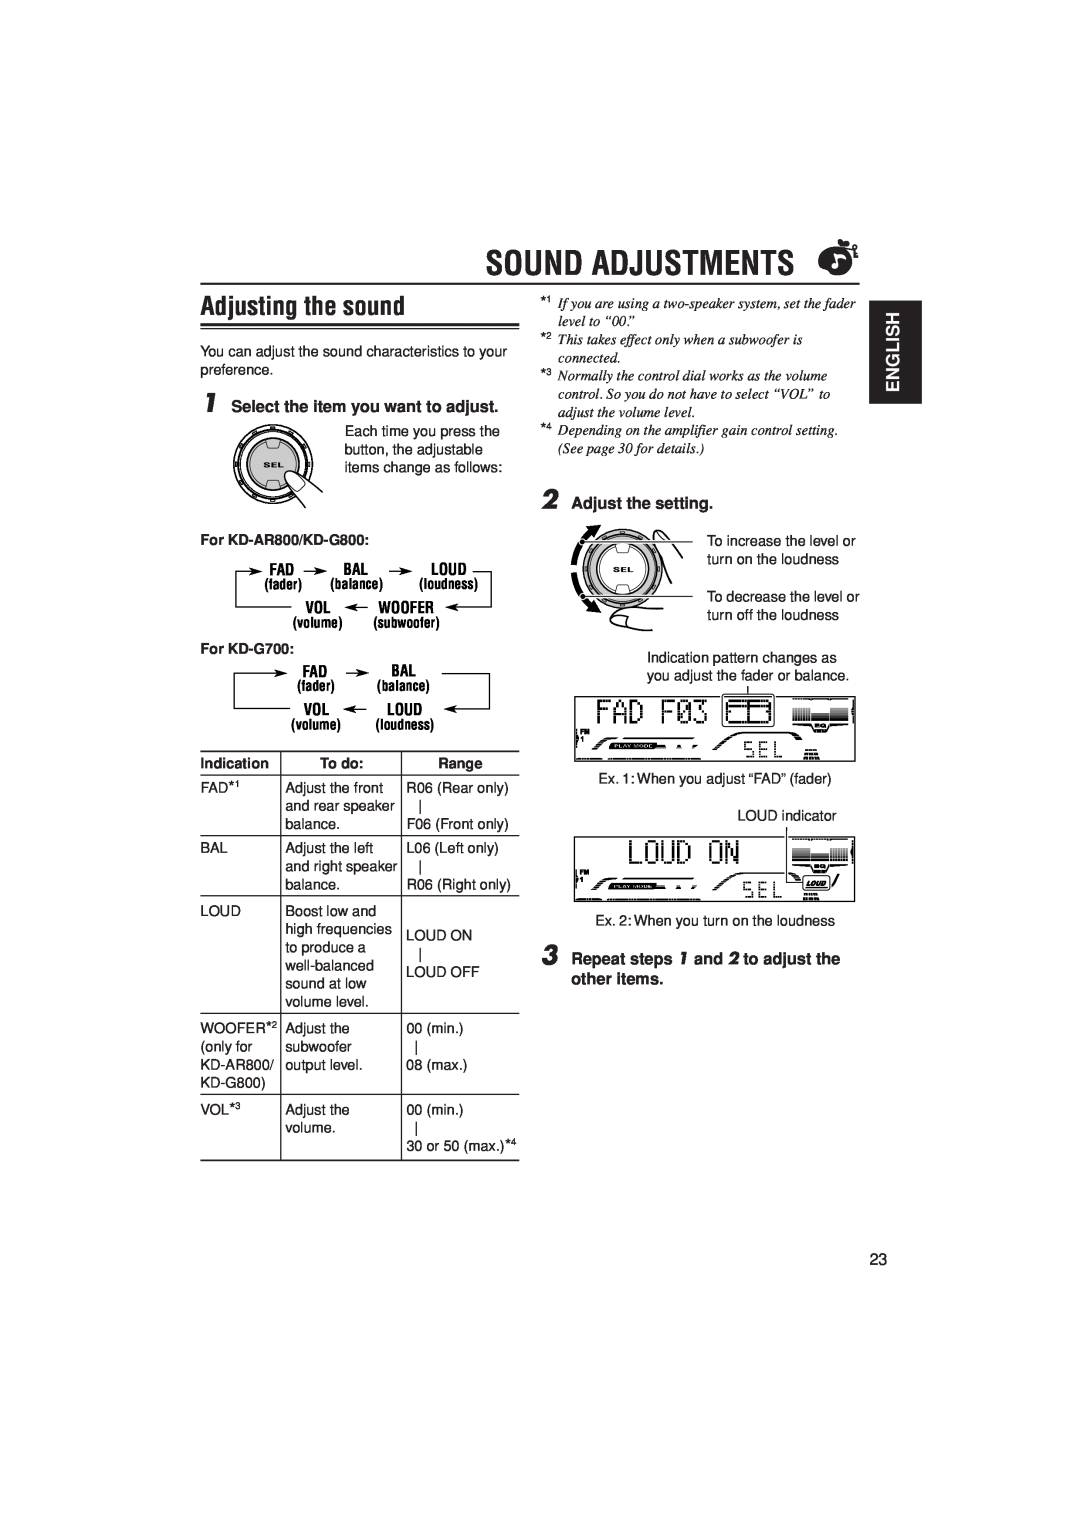 JVC KD-G800 Sound Adjustments, Adjusting the sound, 1Select the item you want to adjust, 2Adjust the setting, Fad Bal Loud 